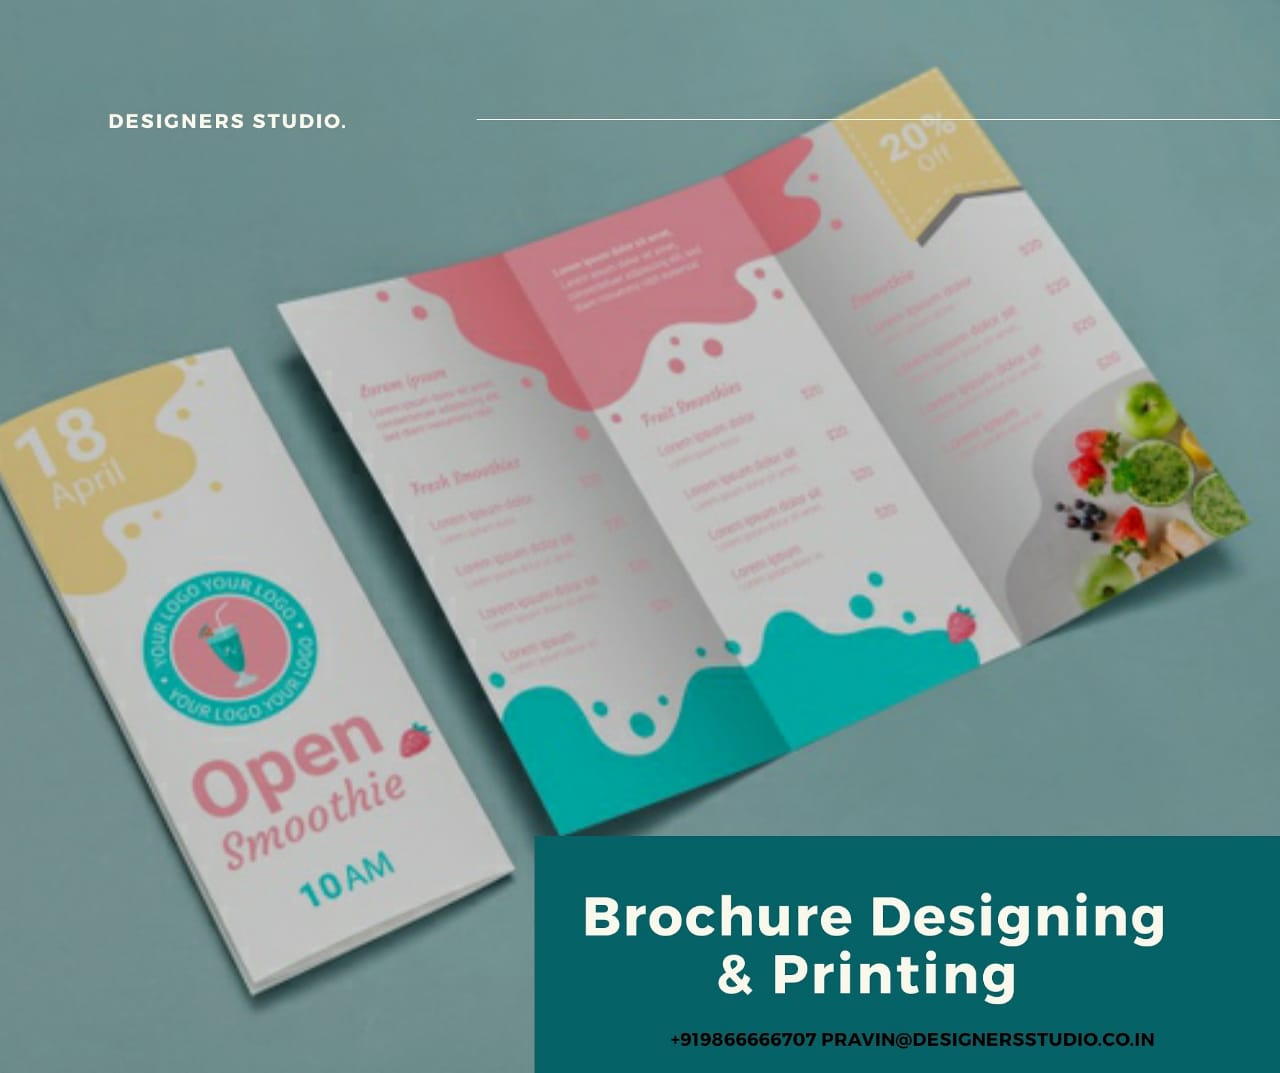 Brochure designing and Printing